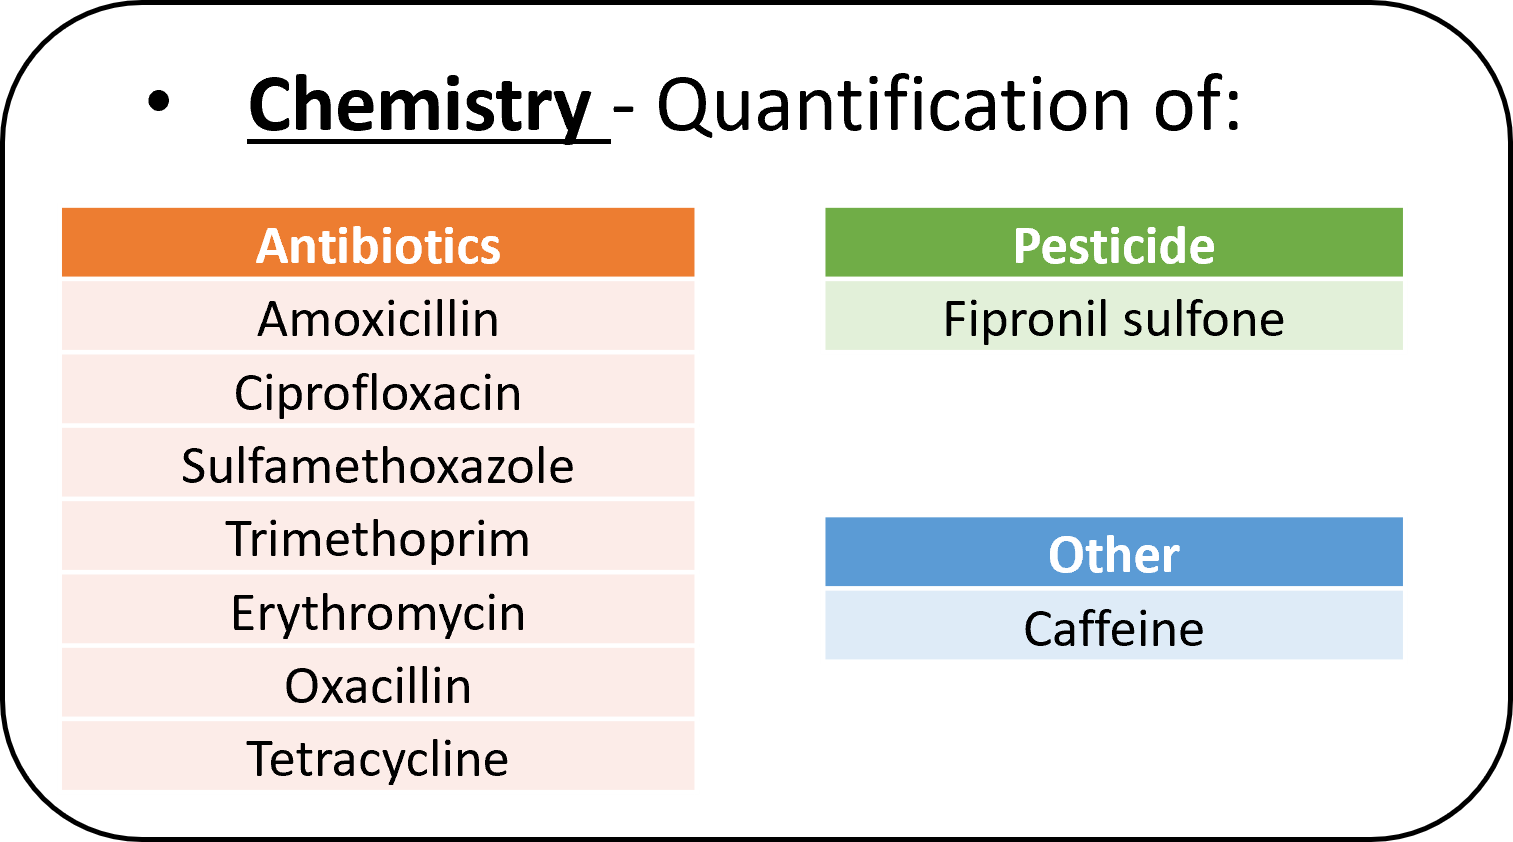 A list of the chemicals to be analysed. Antibiotics amoxicillin, ciprofloxacin, sulfamethoxazole, trimethoprim, erythromycin, oxacillin, tetracycline. Pesticide - fipronil sulfone and also caffeine.